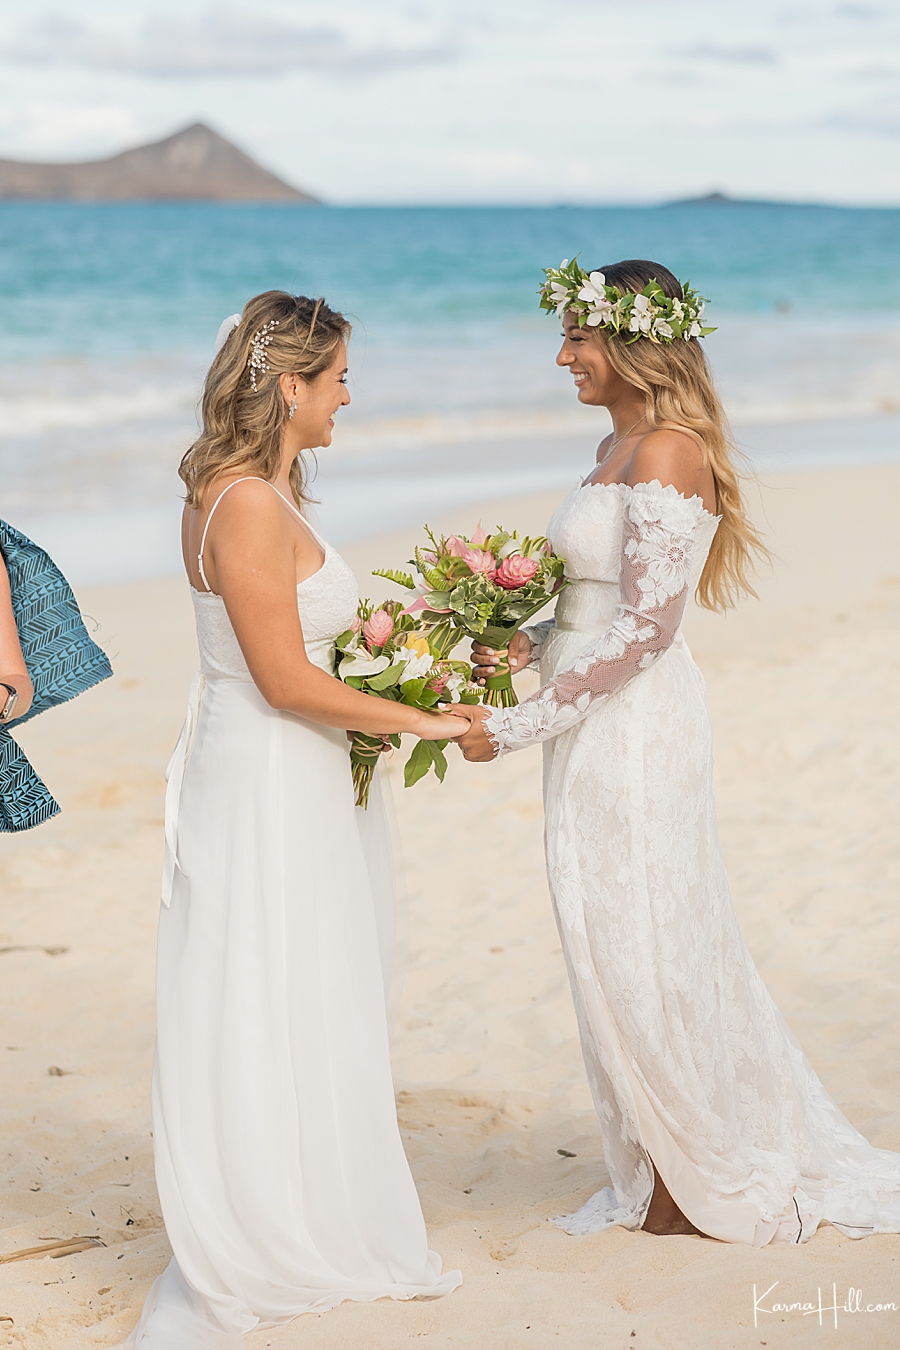 Hawaii Brides at beach wedding